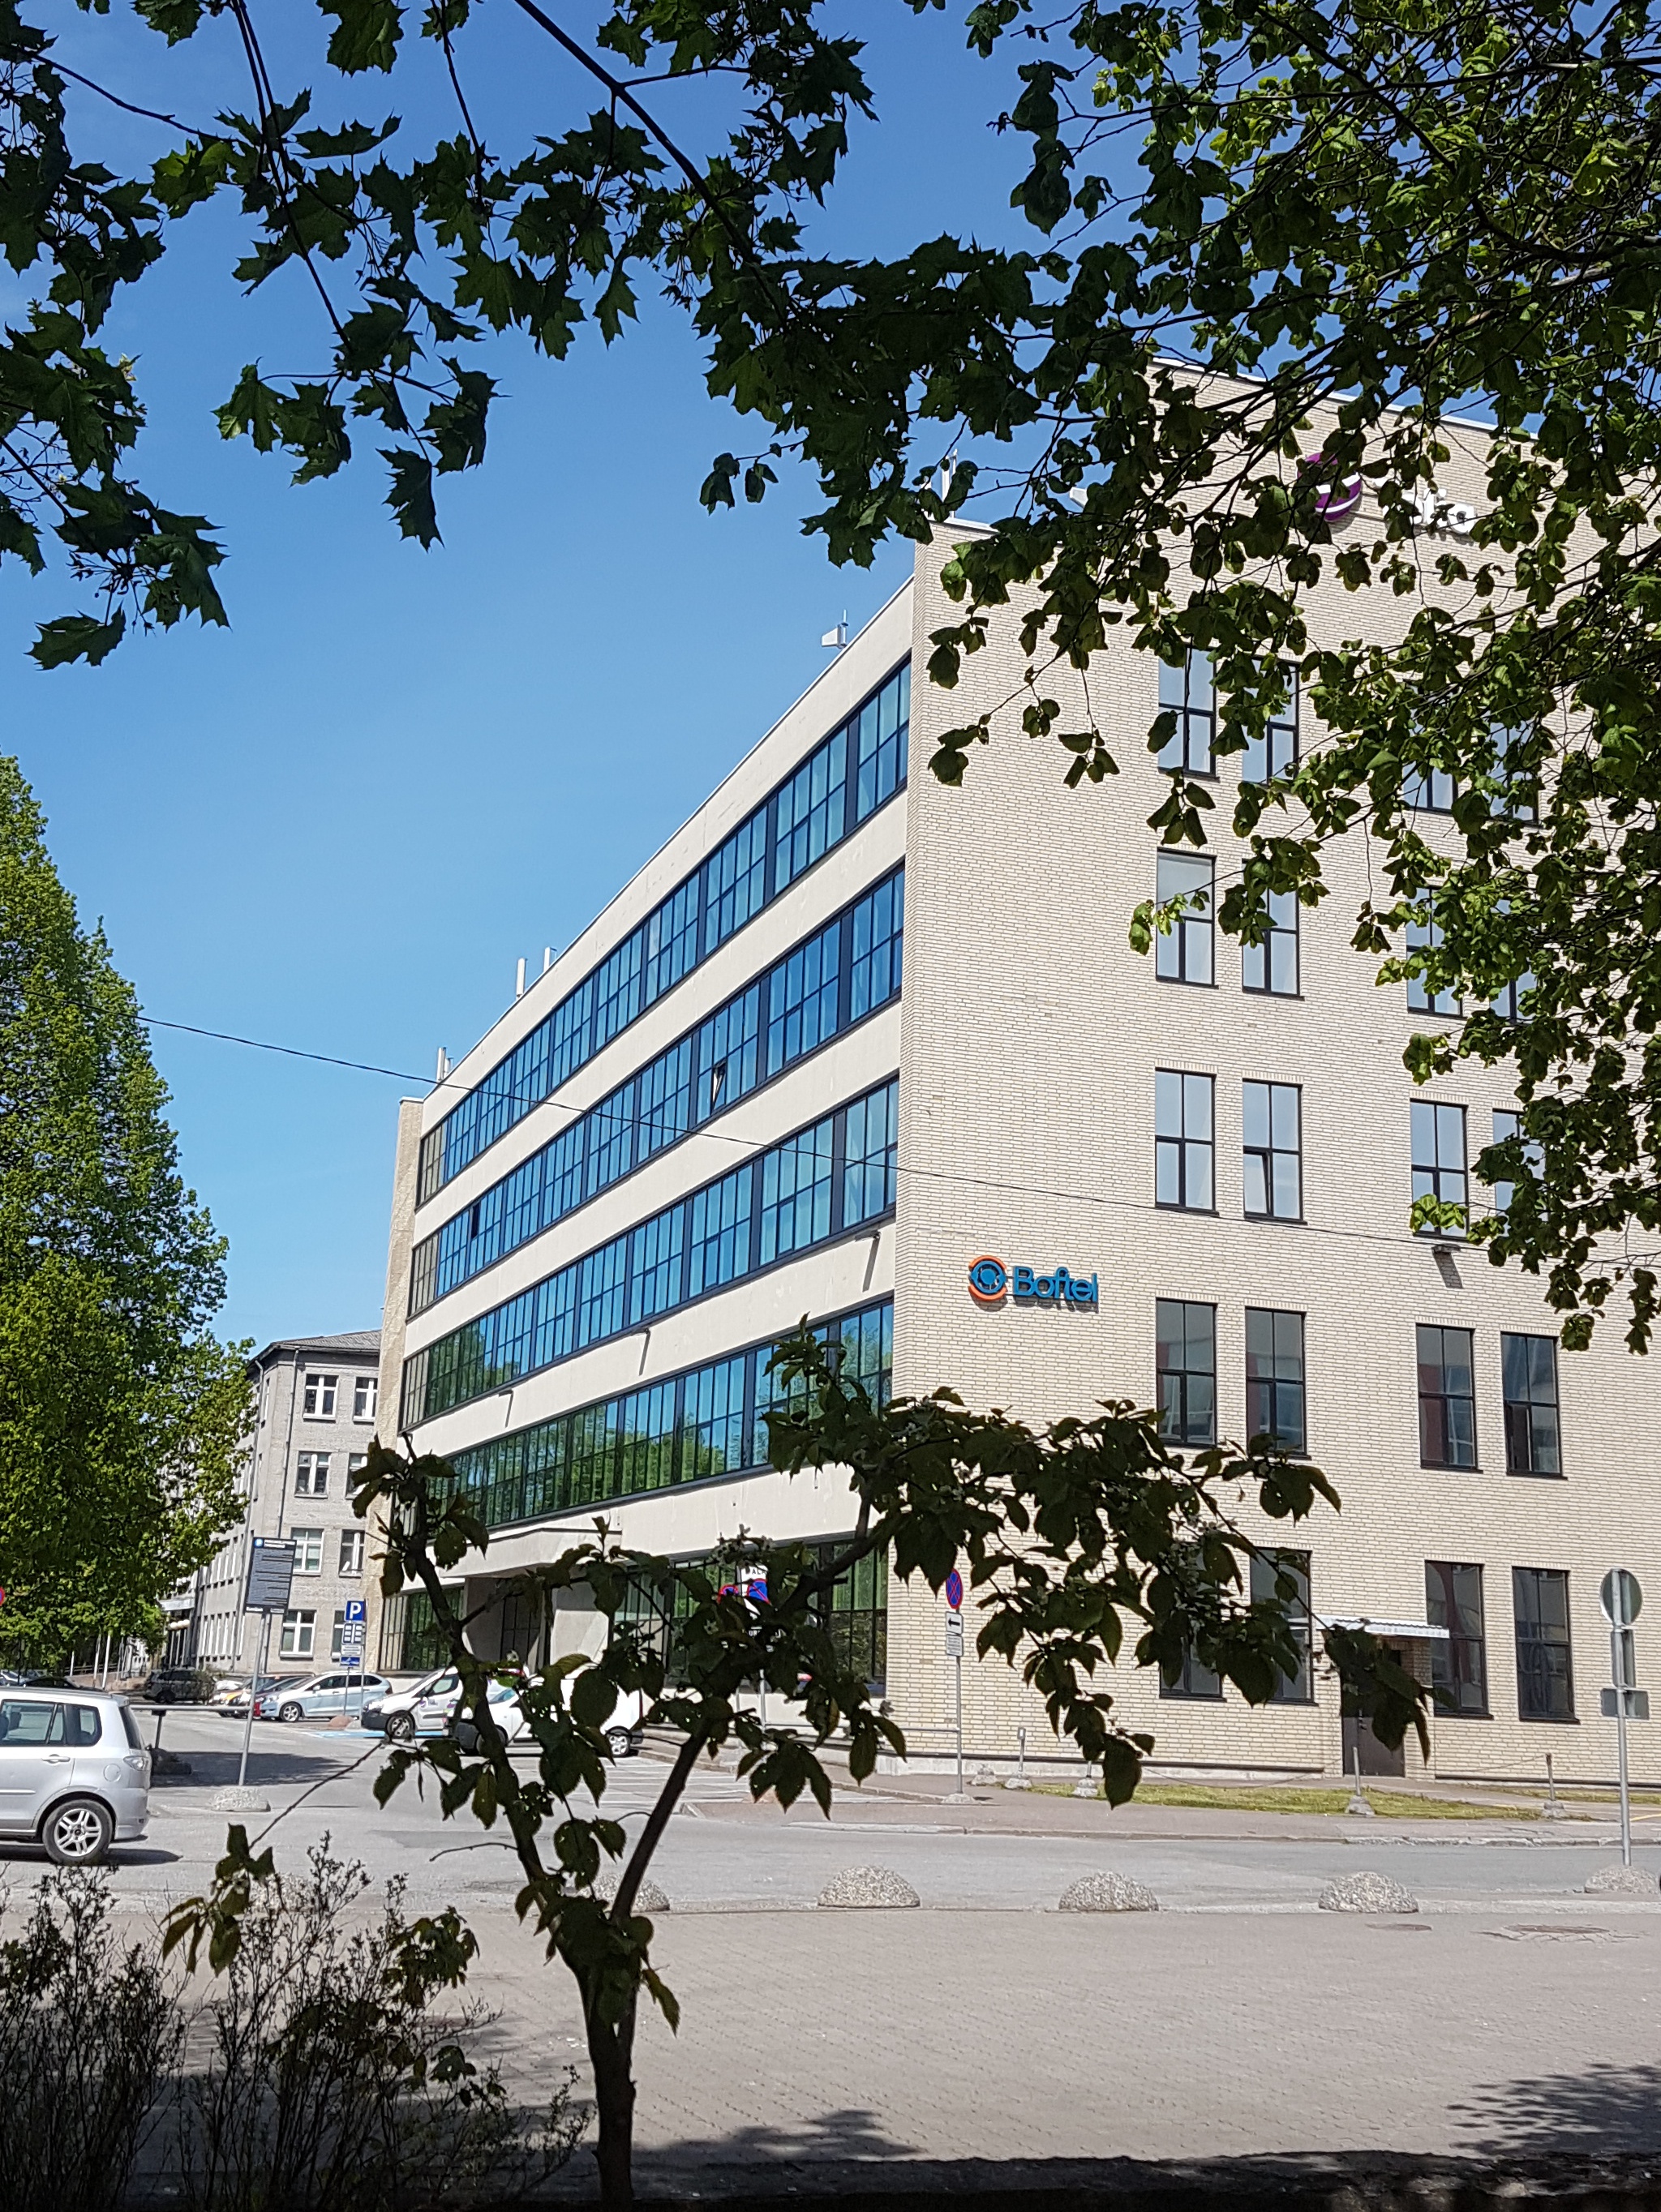 New building of Tallinn Phone Facility. rephoto